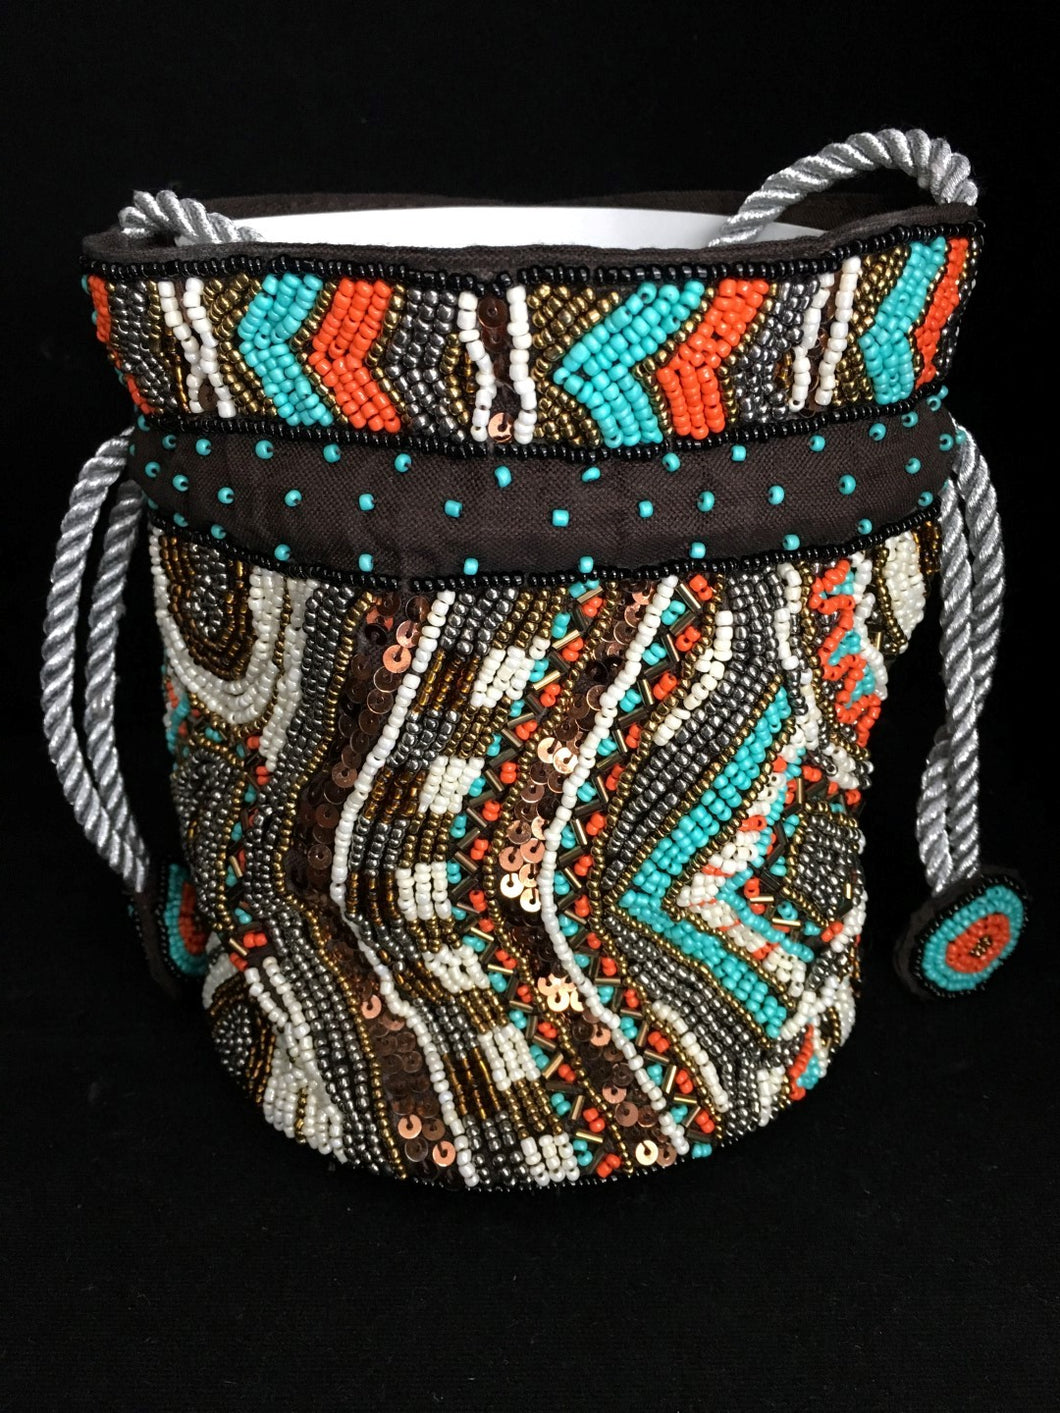 bag - cylinder - beaded - makeup/jewlery - turq/orange/brown/cream - navaho inspired